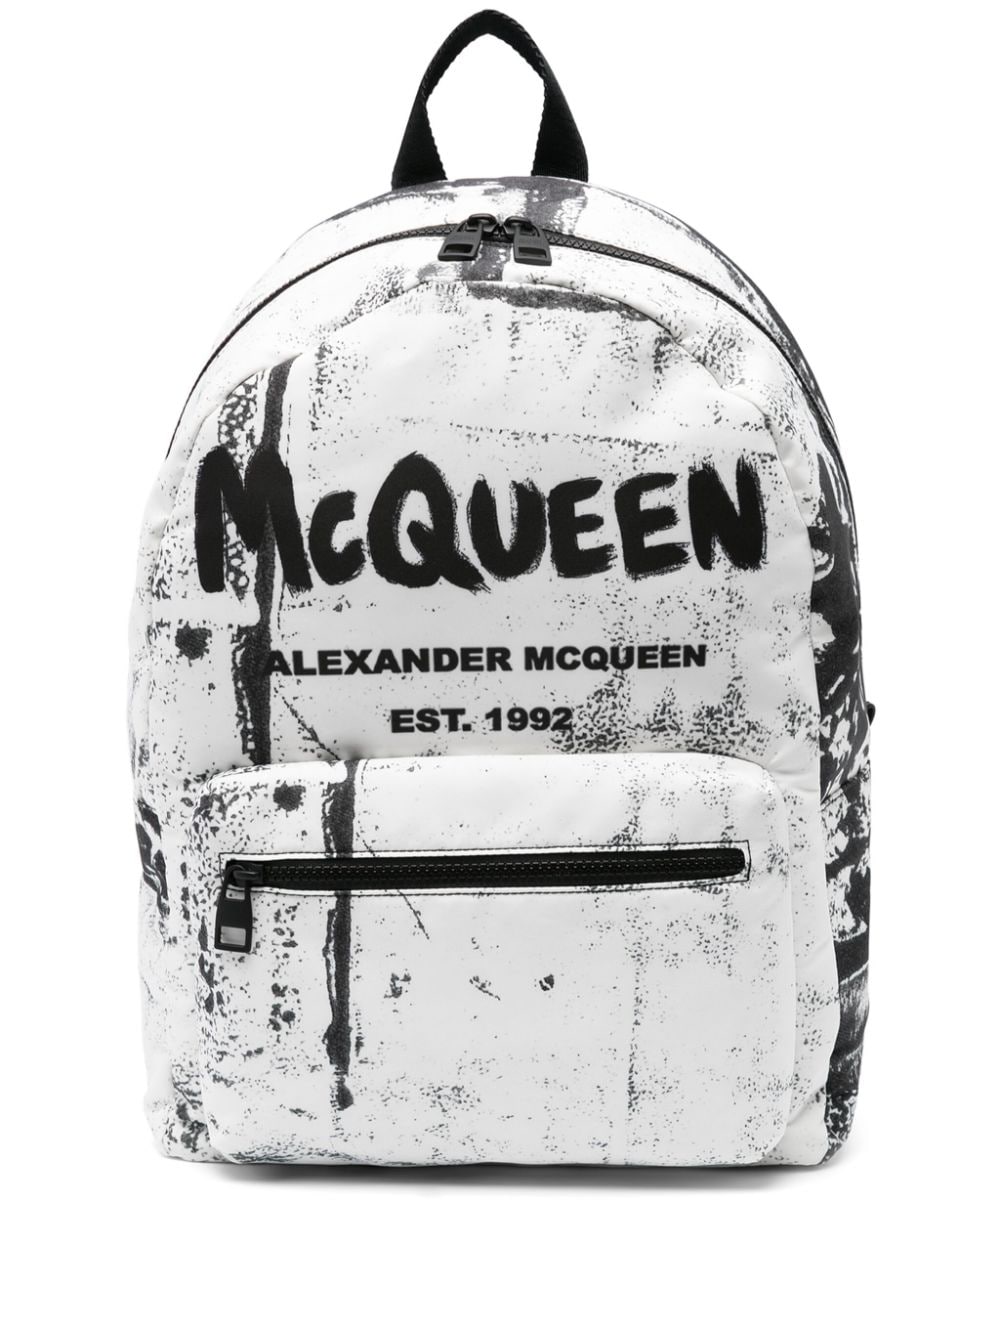 ALEXANDER MCQUEEN Graffiti Metropolitan Backpack for Men - Black